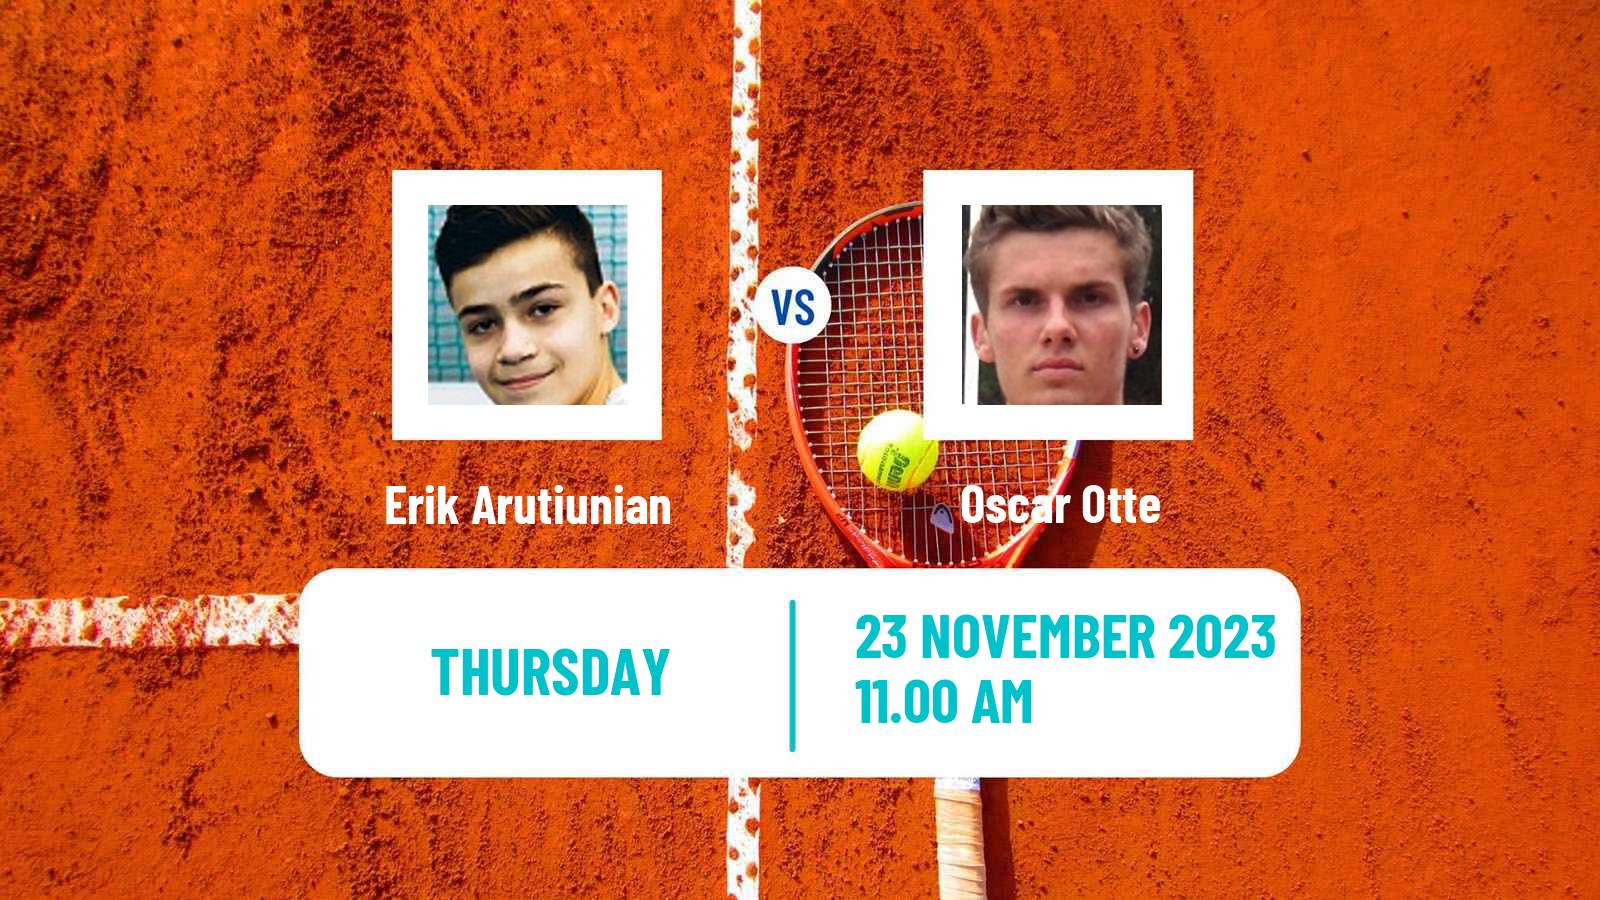 Tennis ITF M25 Monastir 9 Men Erik Arutiunian - Oscar Otte